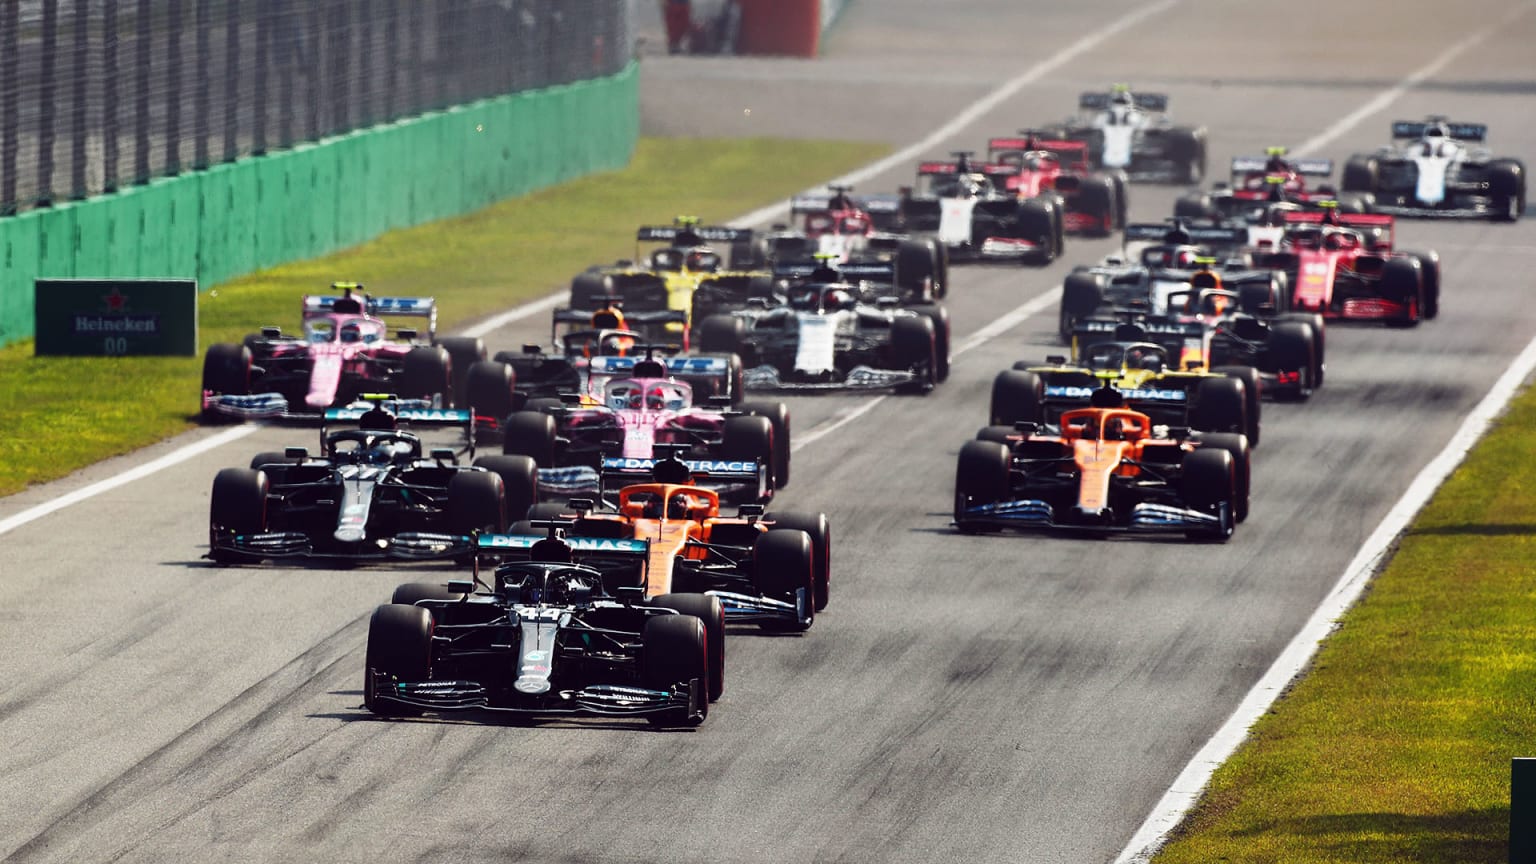 Italian Grand Prix 2021 F1 Race